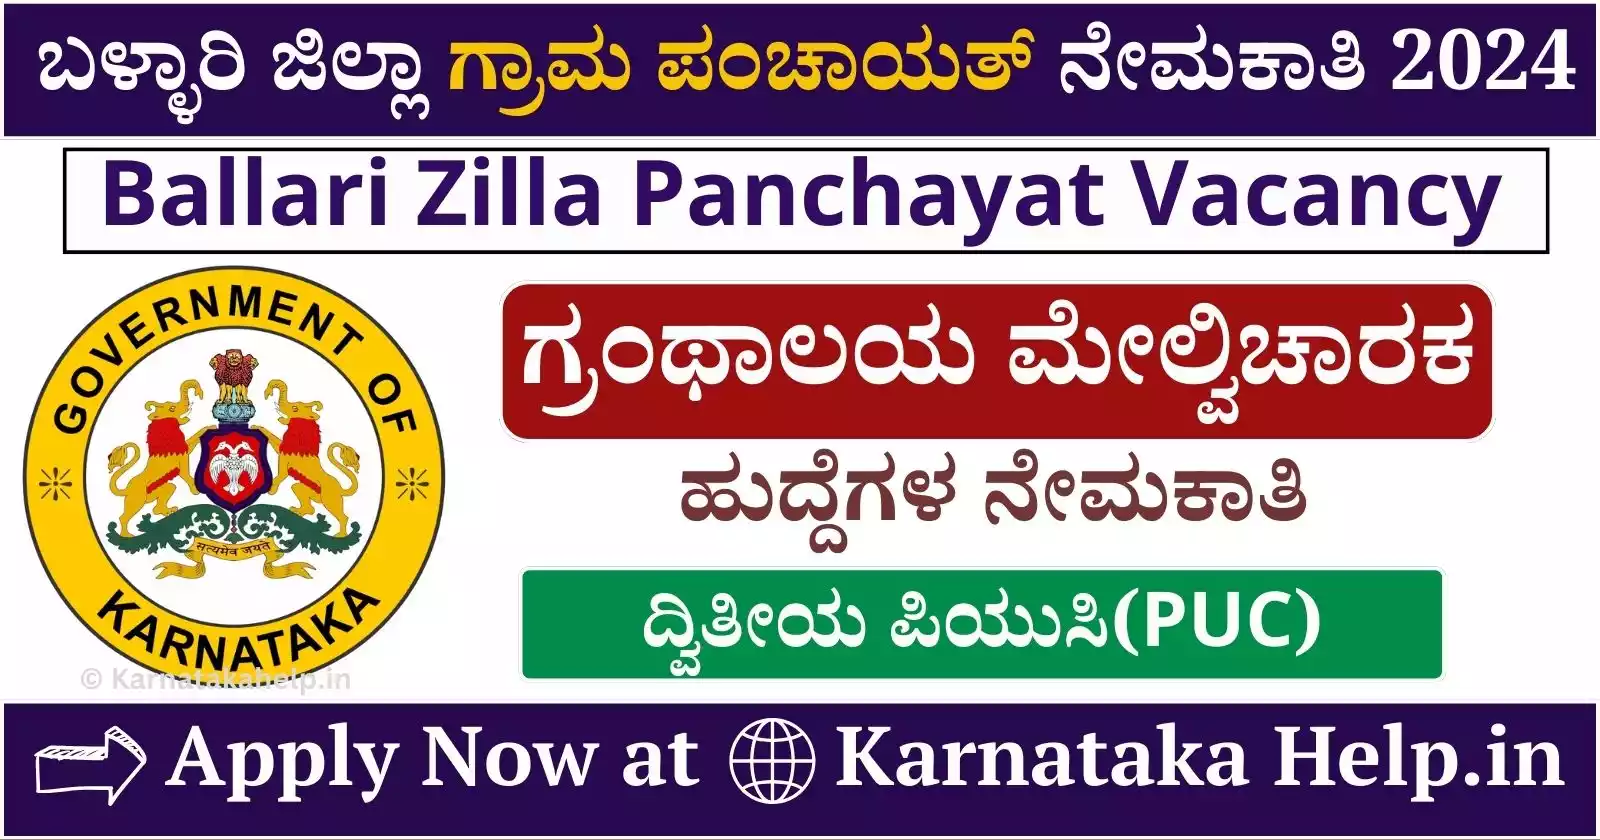 Ballari Zilla Panchayat Recruitment 2024 Notification